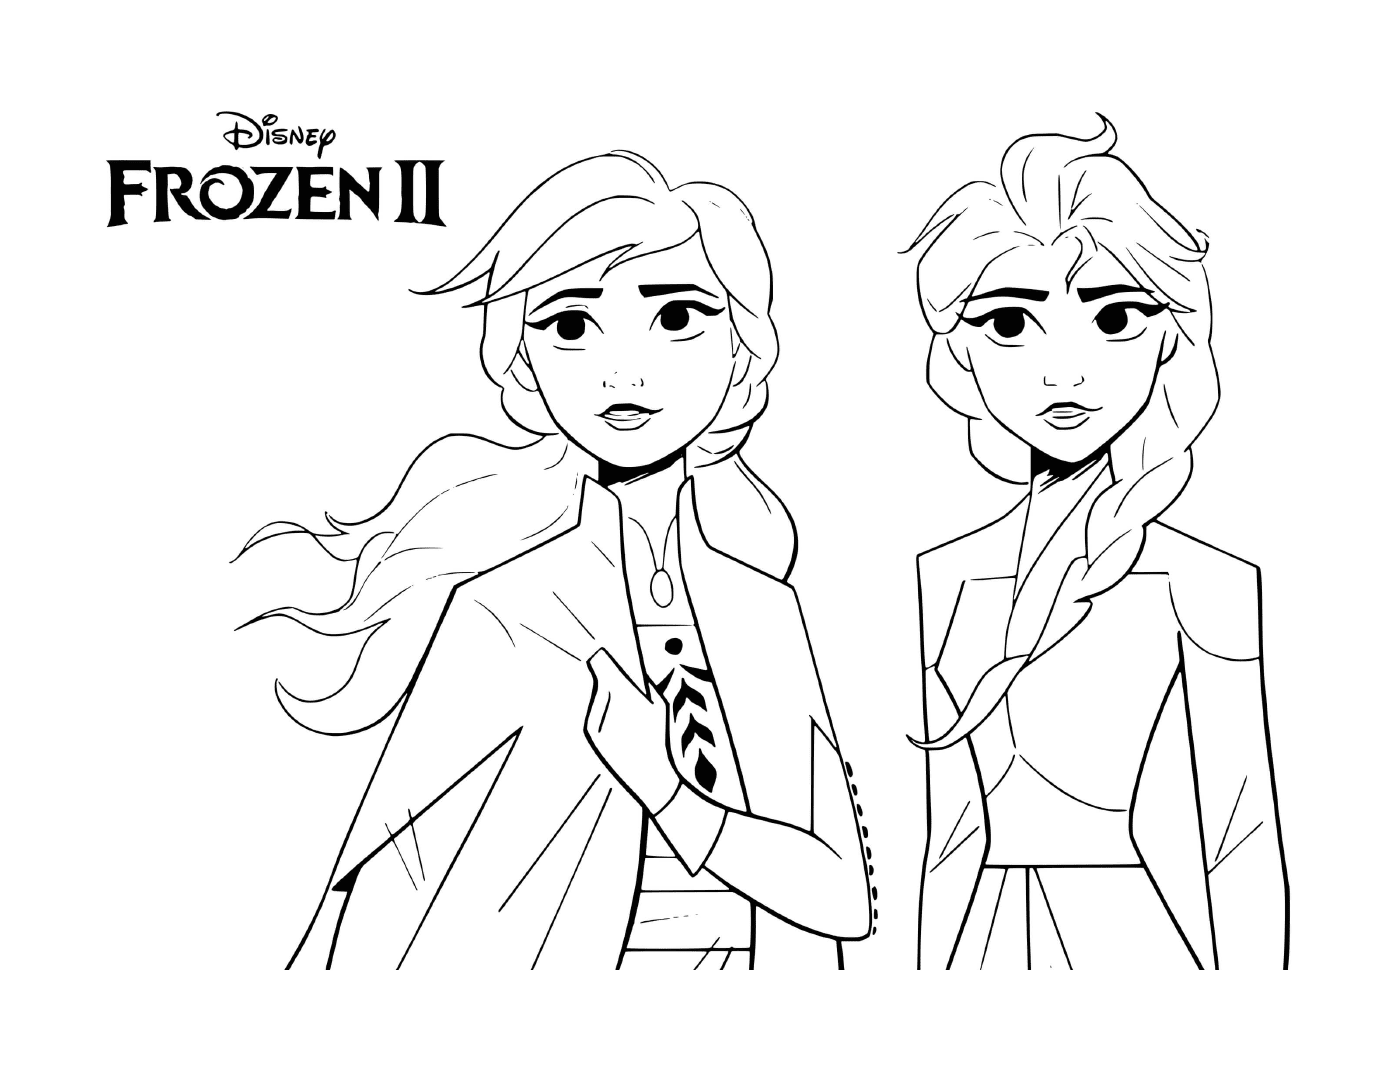  Elsa e Anna insieme 